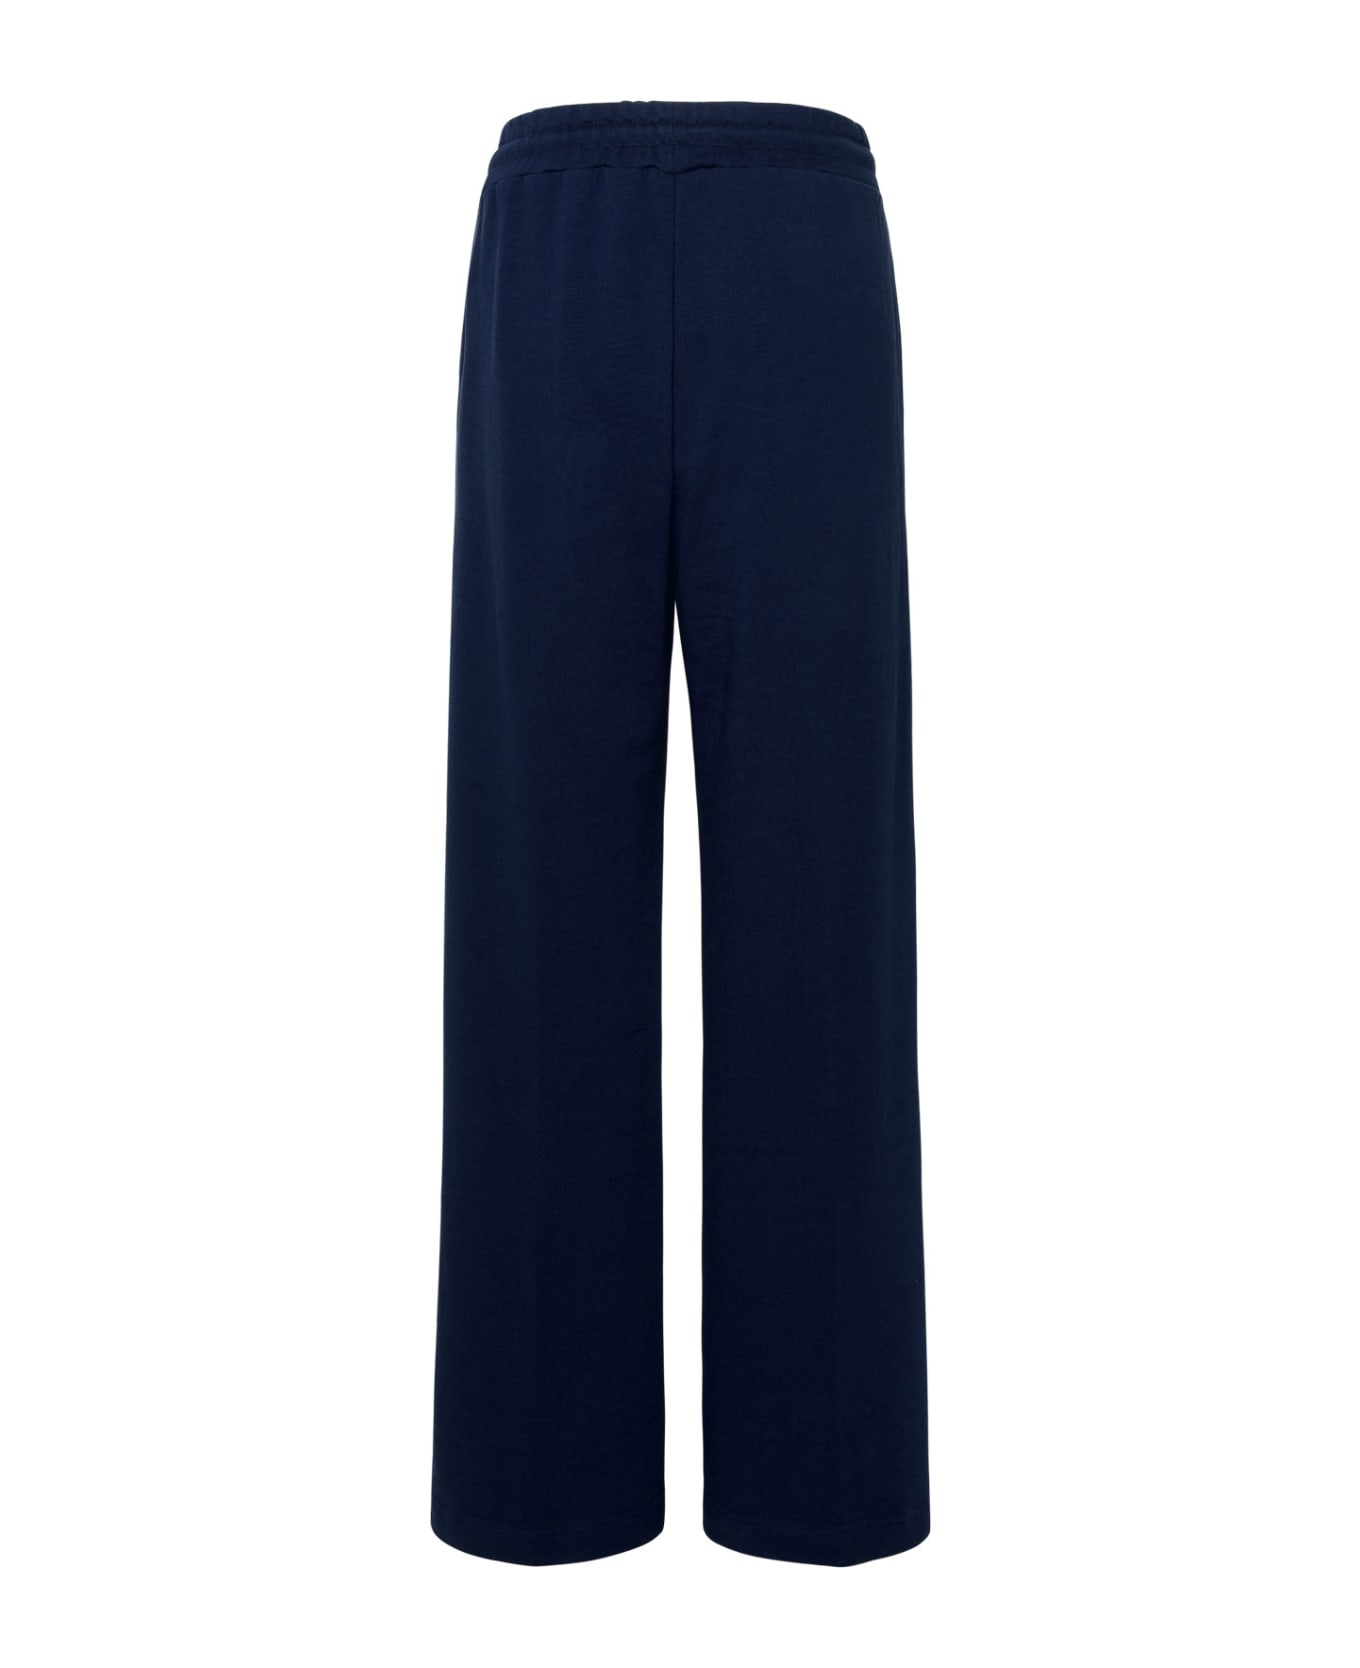 MSGM Blue Cotton Pants - Navy